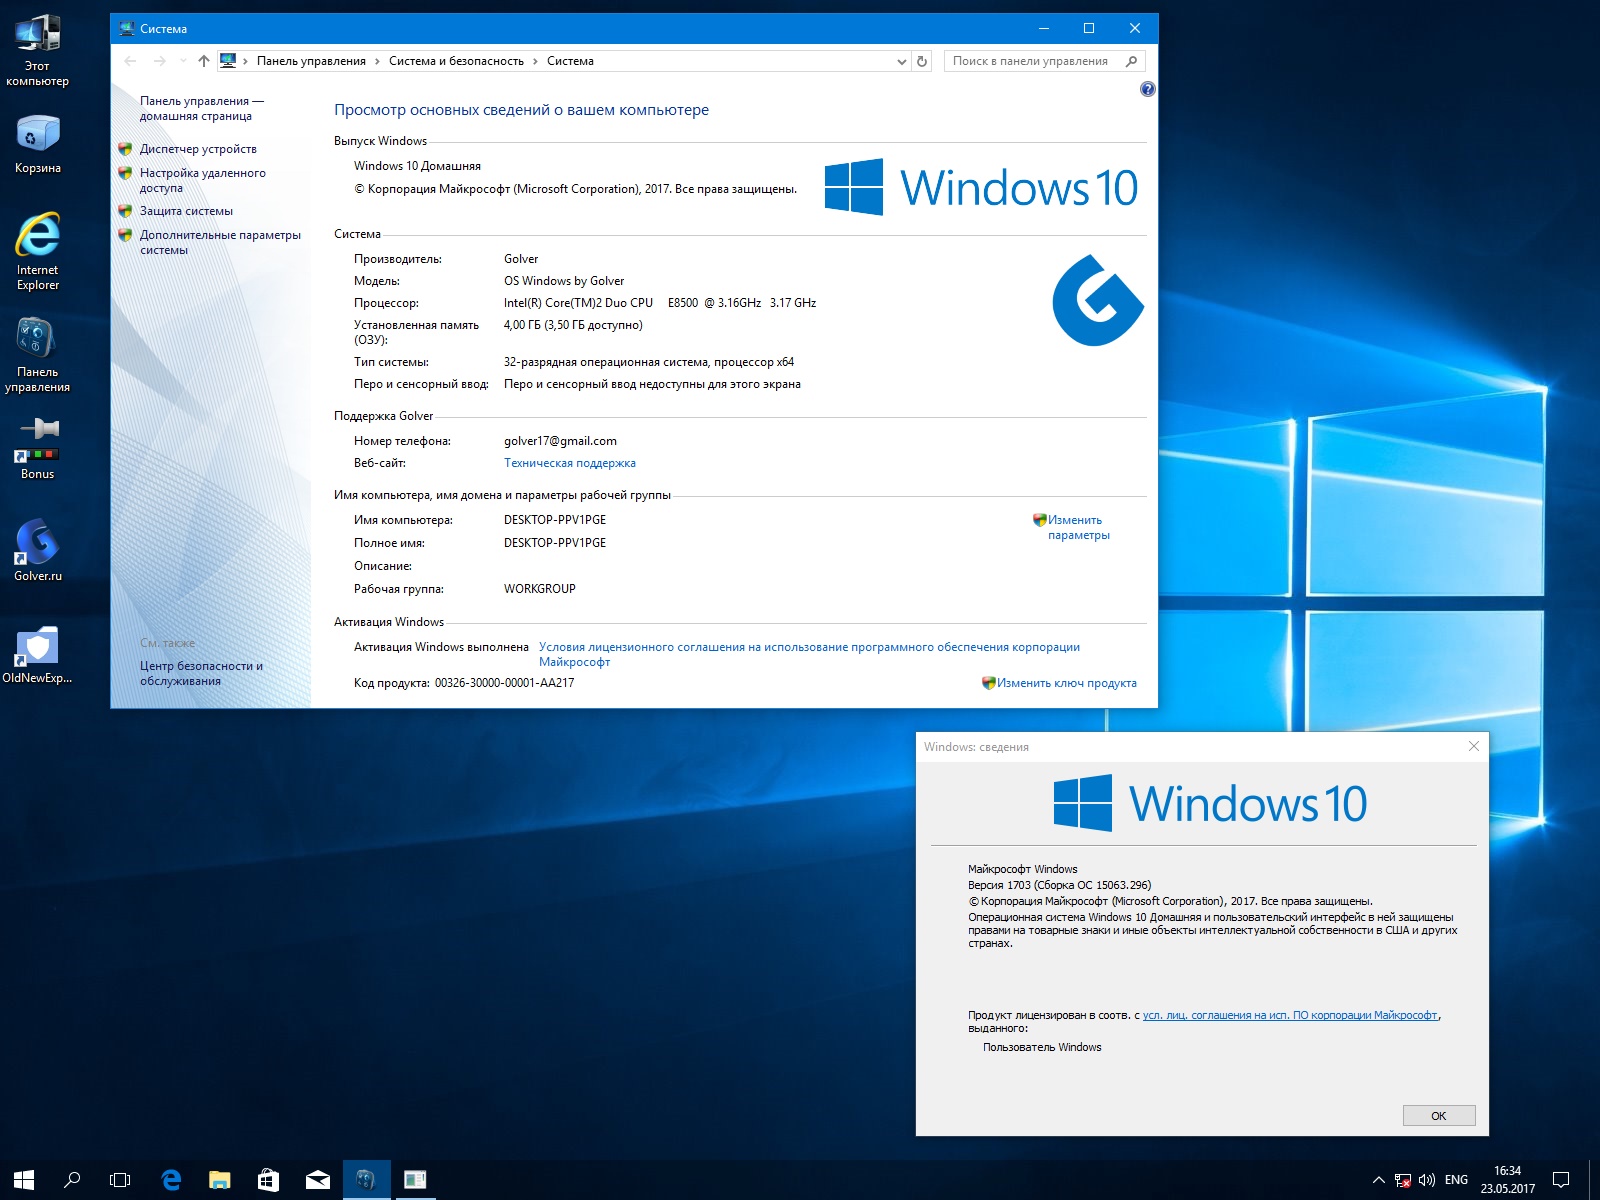 Win 10 tools. Microsoft Windows 10 professional x32/x64. Ноут виндовс 10. Виндовс 10 16 ГБ. Операционная система Windows 10 Pro x64.